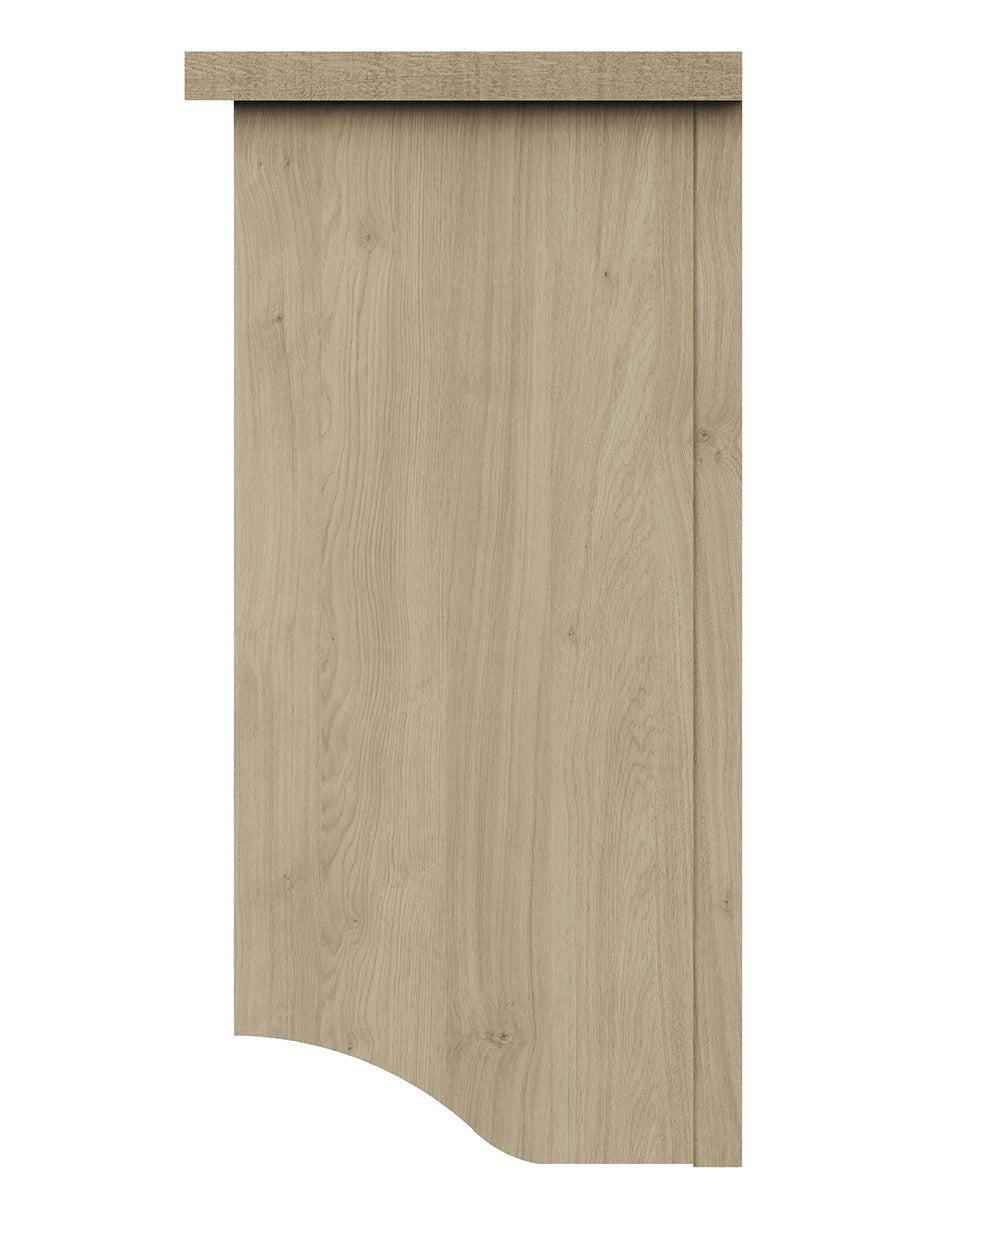 GFW Kempton wall rack oak effect hallway storage unit featured on a white cut out background sideways